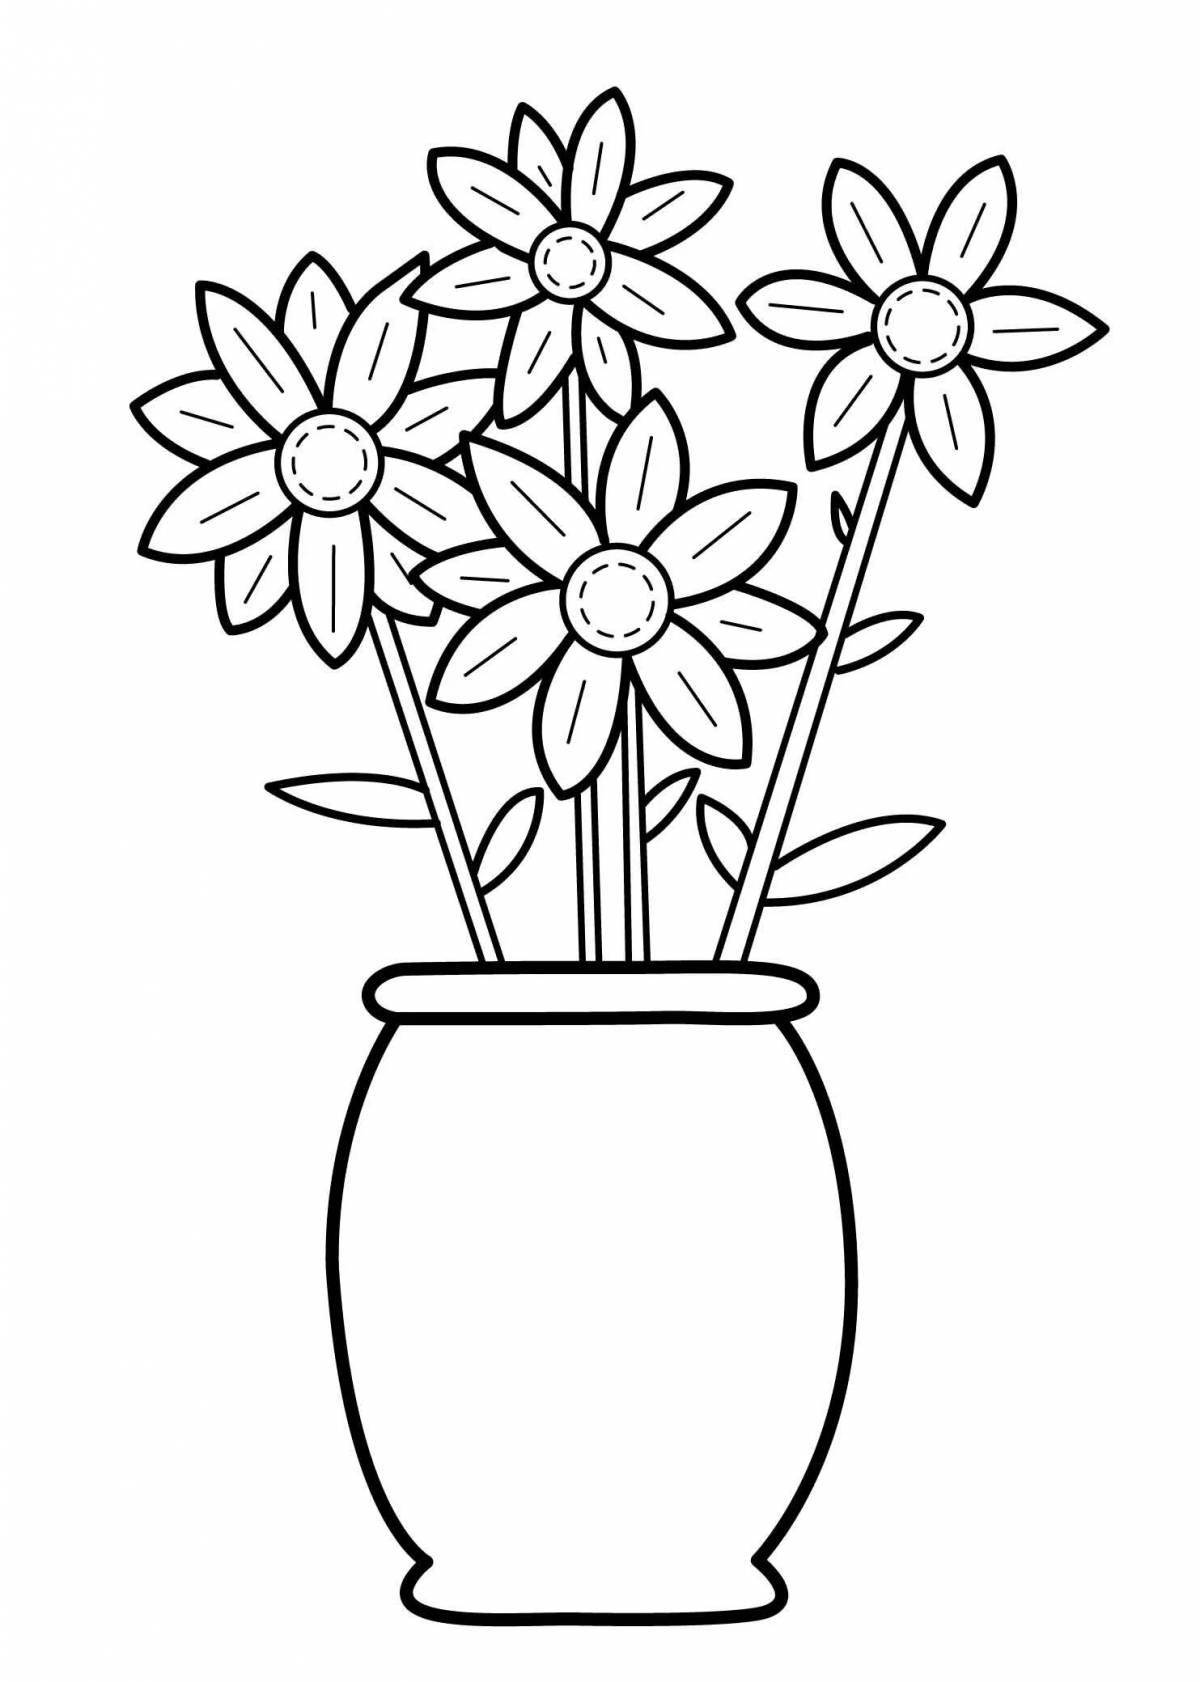 Fun vase with flower arrangement for children 3-4 years old